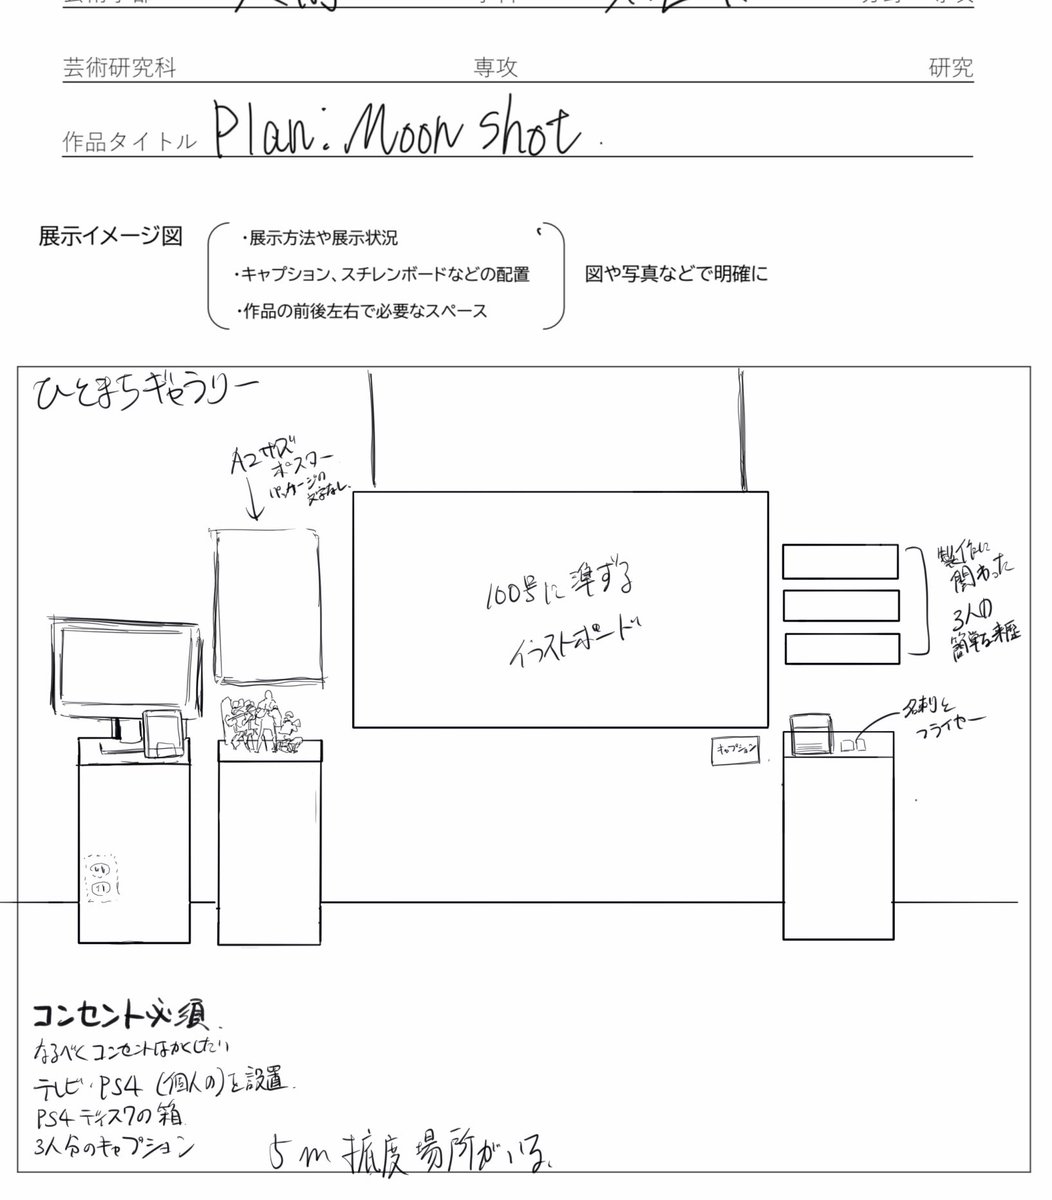 『Plan:Moon Shot』
コンセプトとその展示計画について
本来学校と広島市内の施設2つでの展示予定でしたがコロナ禍もあり変更。

コンセプトと完成するゲームの大筋。SFポリスアクション…のような内容です。選択肢次第で結末が変わる、というようなプレイアブルシーンが欲しかった。 